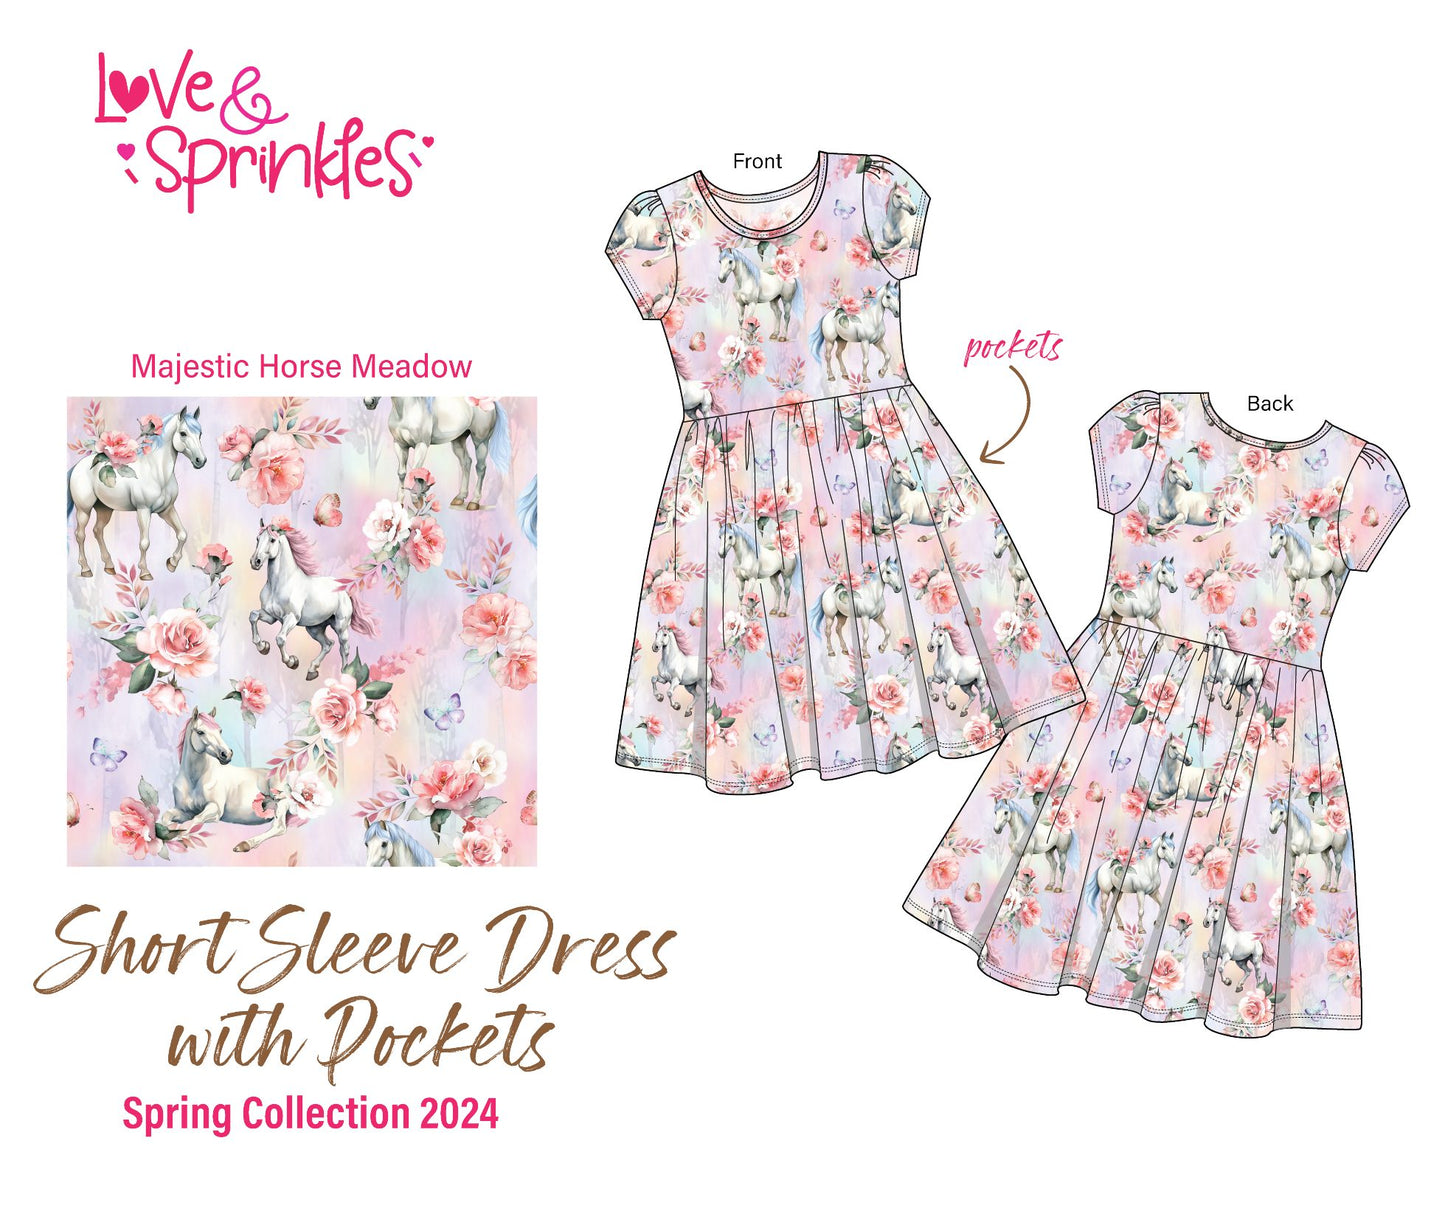 Love & Sprinkles Majestic Horse Meadow Short Sleeve Dress